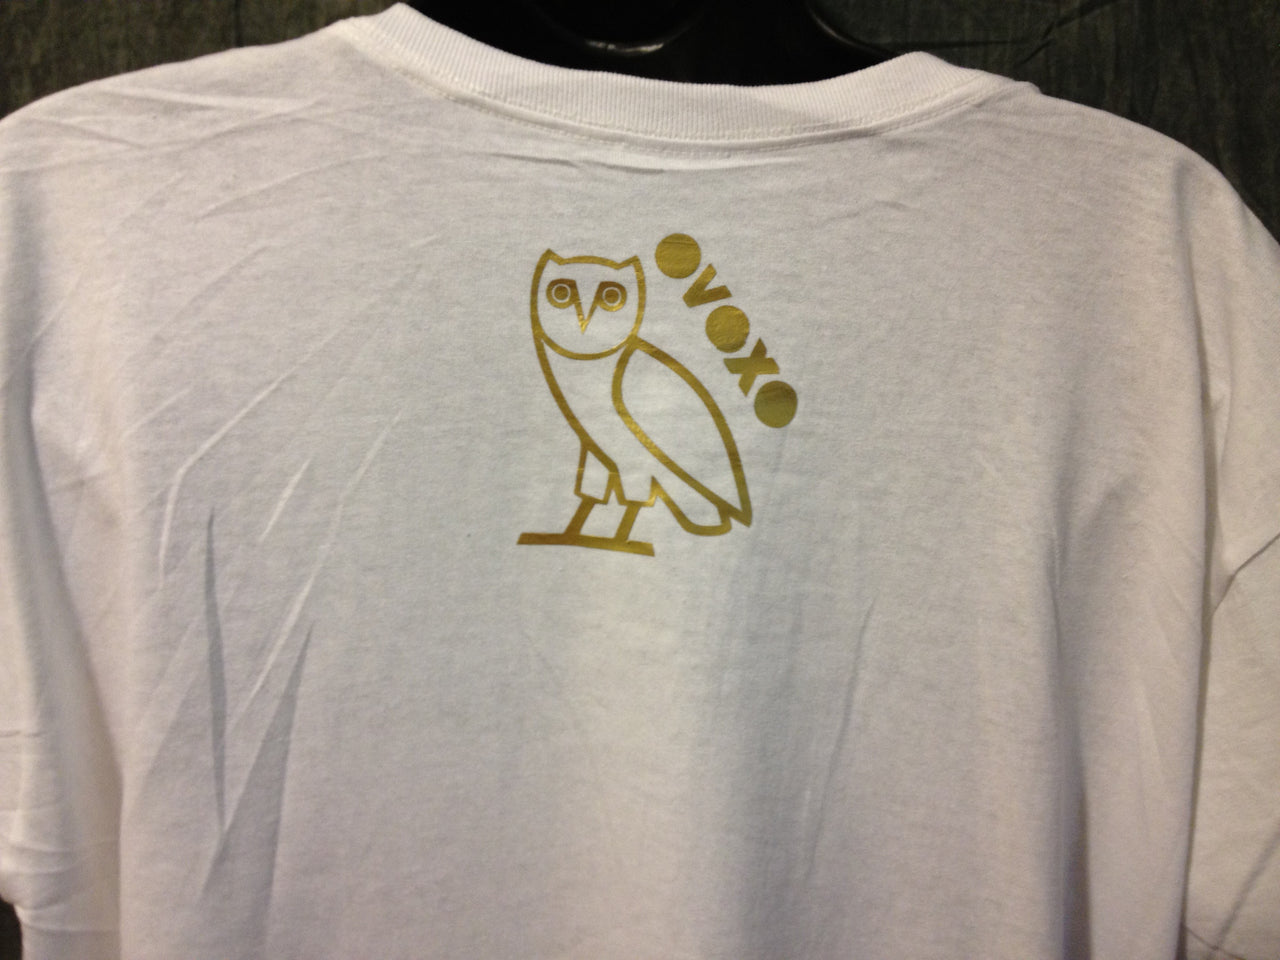 Ovo Drake October's Very Own Ovoxo Owl Gang Girls Tshirt: Gold Print on White Womens Tshirt - TshirtNow.net - 4